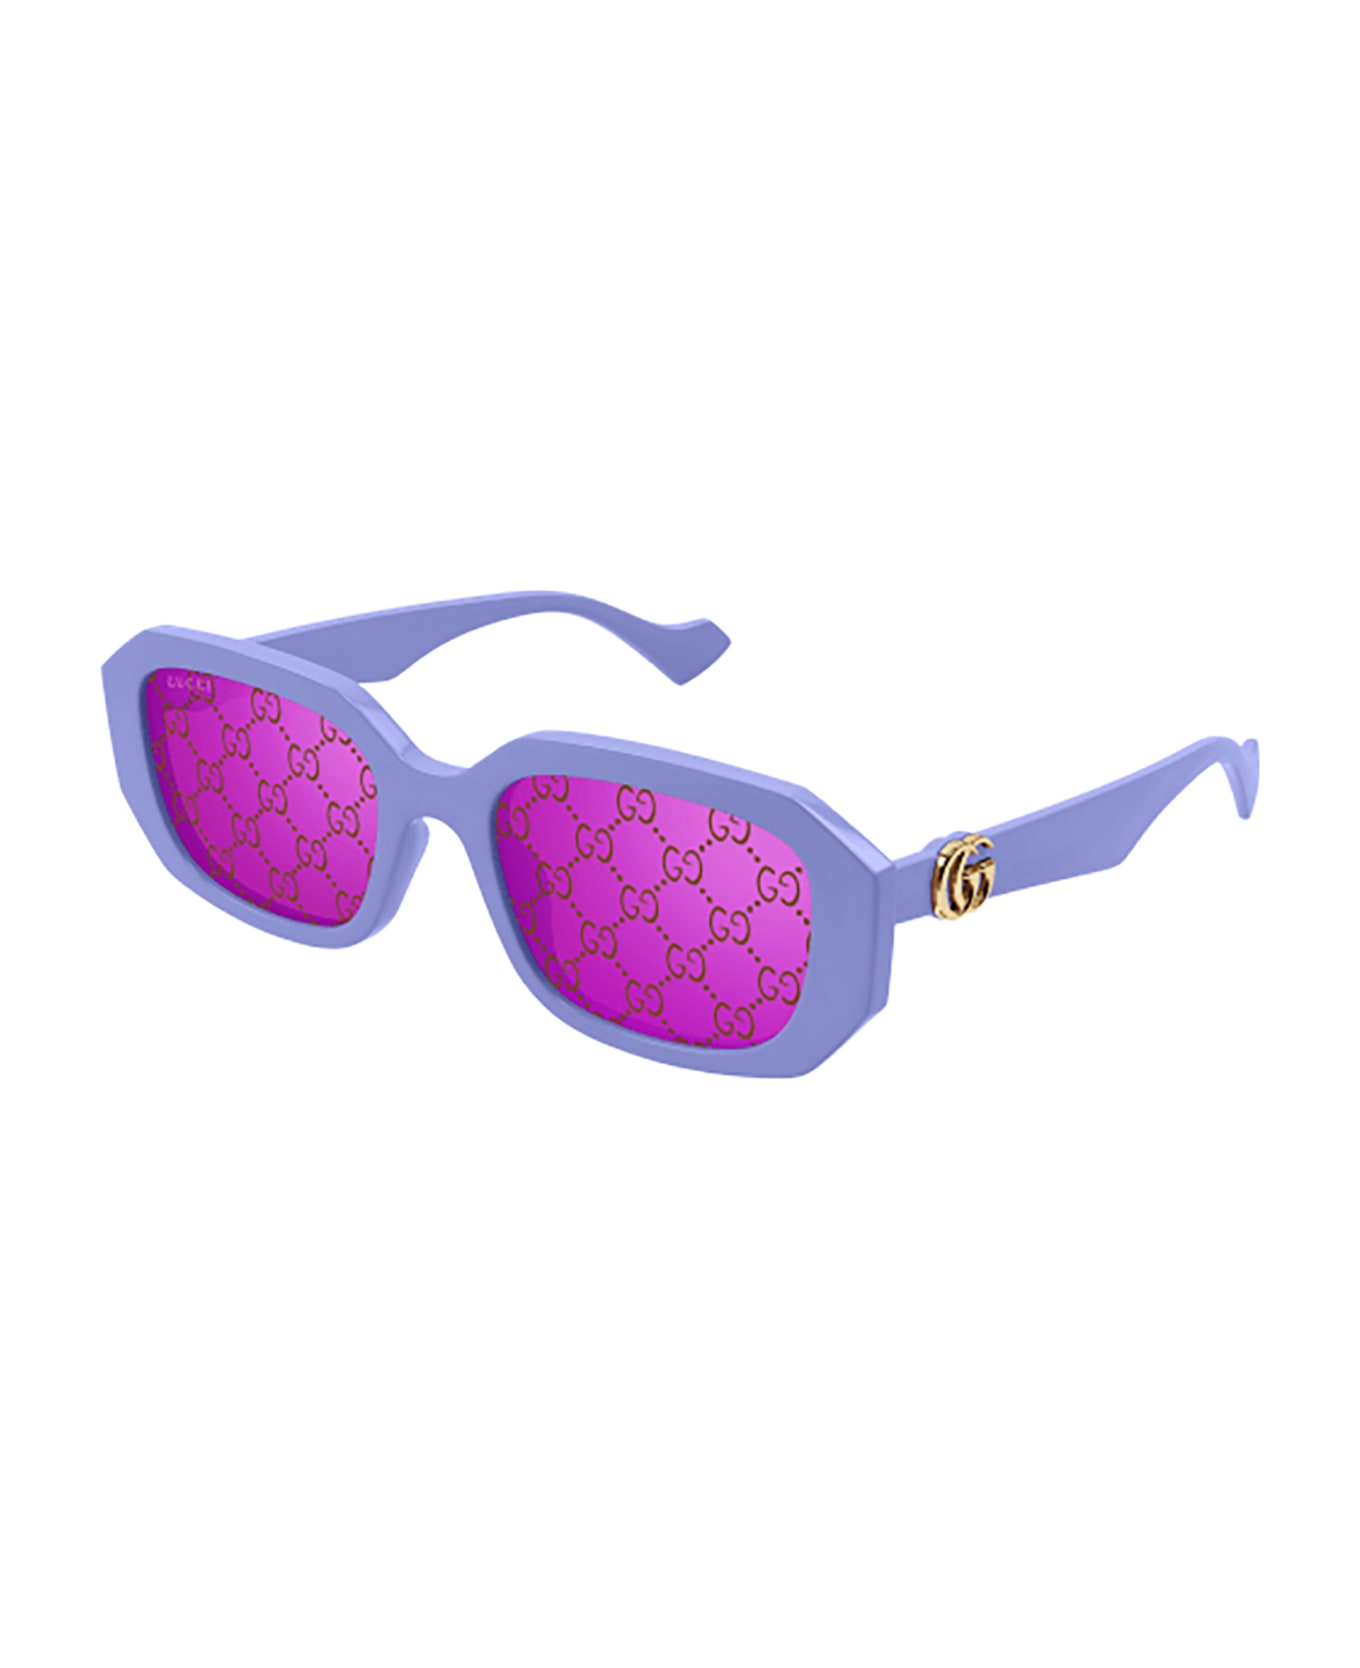 Gucci Eyewear GG1535S Sunglasses - Violet Violet Pink